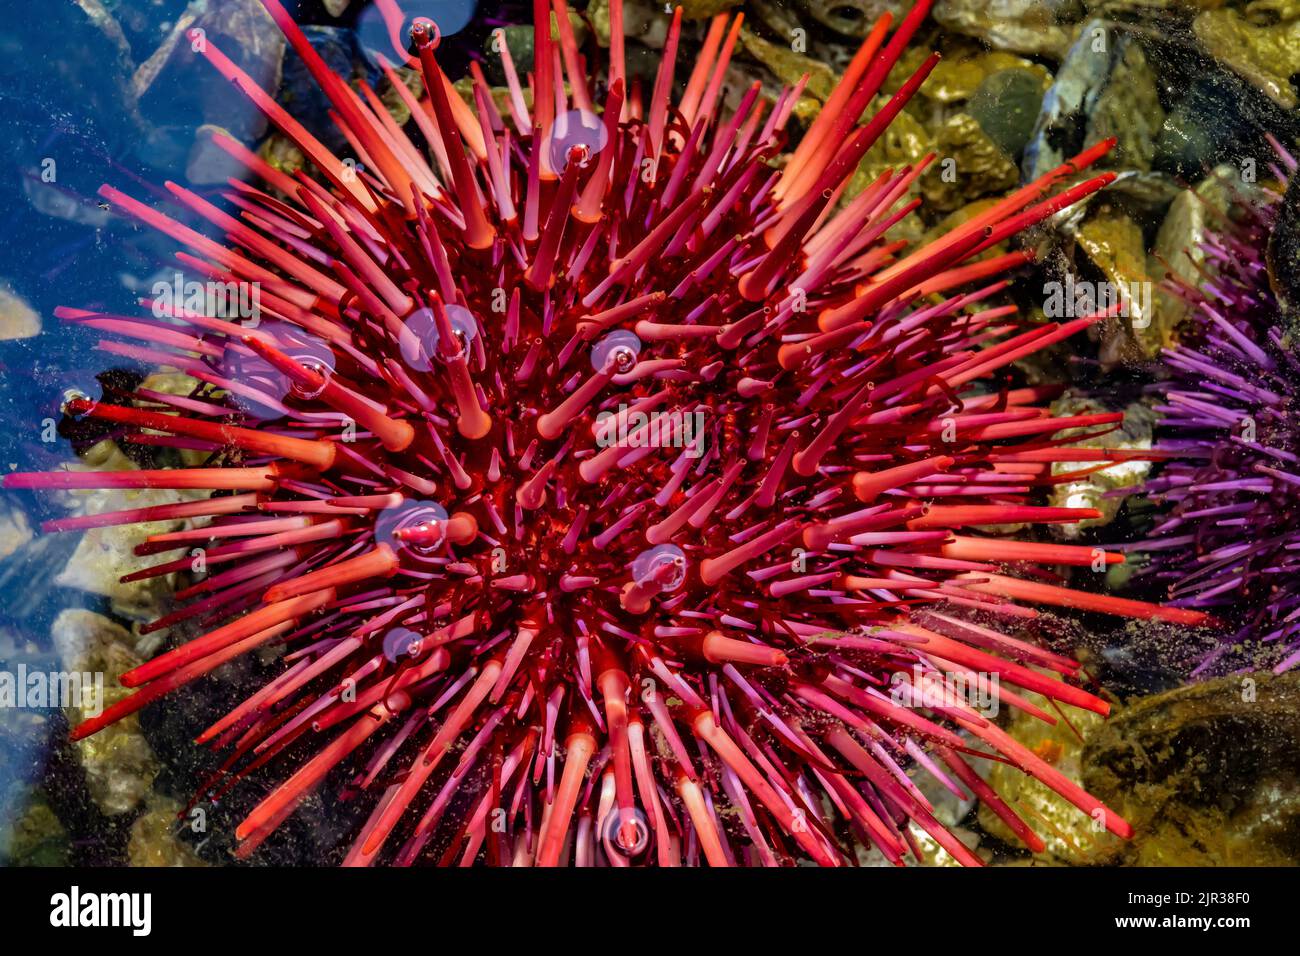 Red Sea Urchin, Mesocentrotus franciscanus, at Tongue Point in Salt Creek Recreation Area along the Strait of Juan de Fuca, Olympic Peninsula, Washing Stock Photo